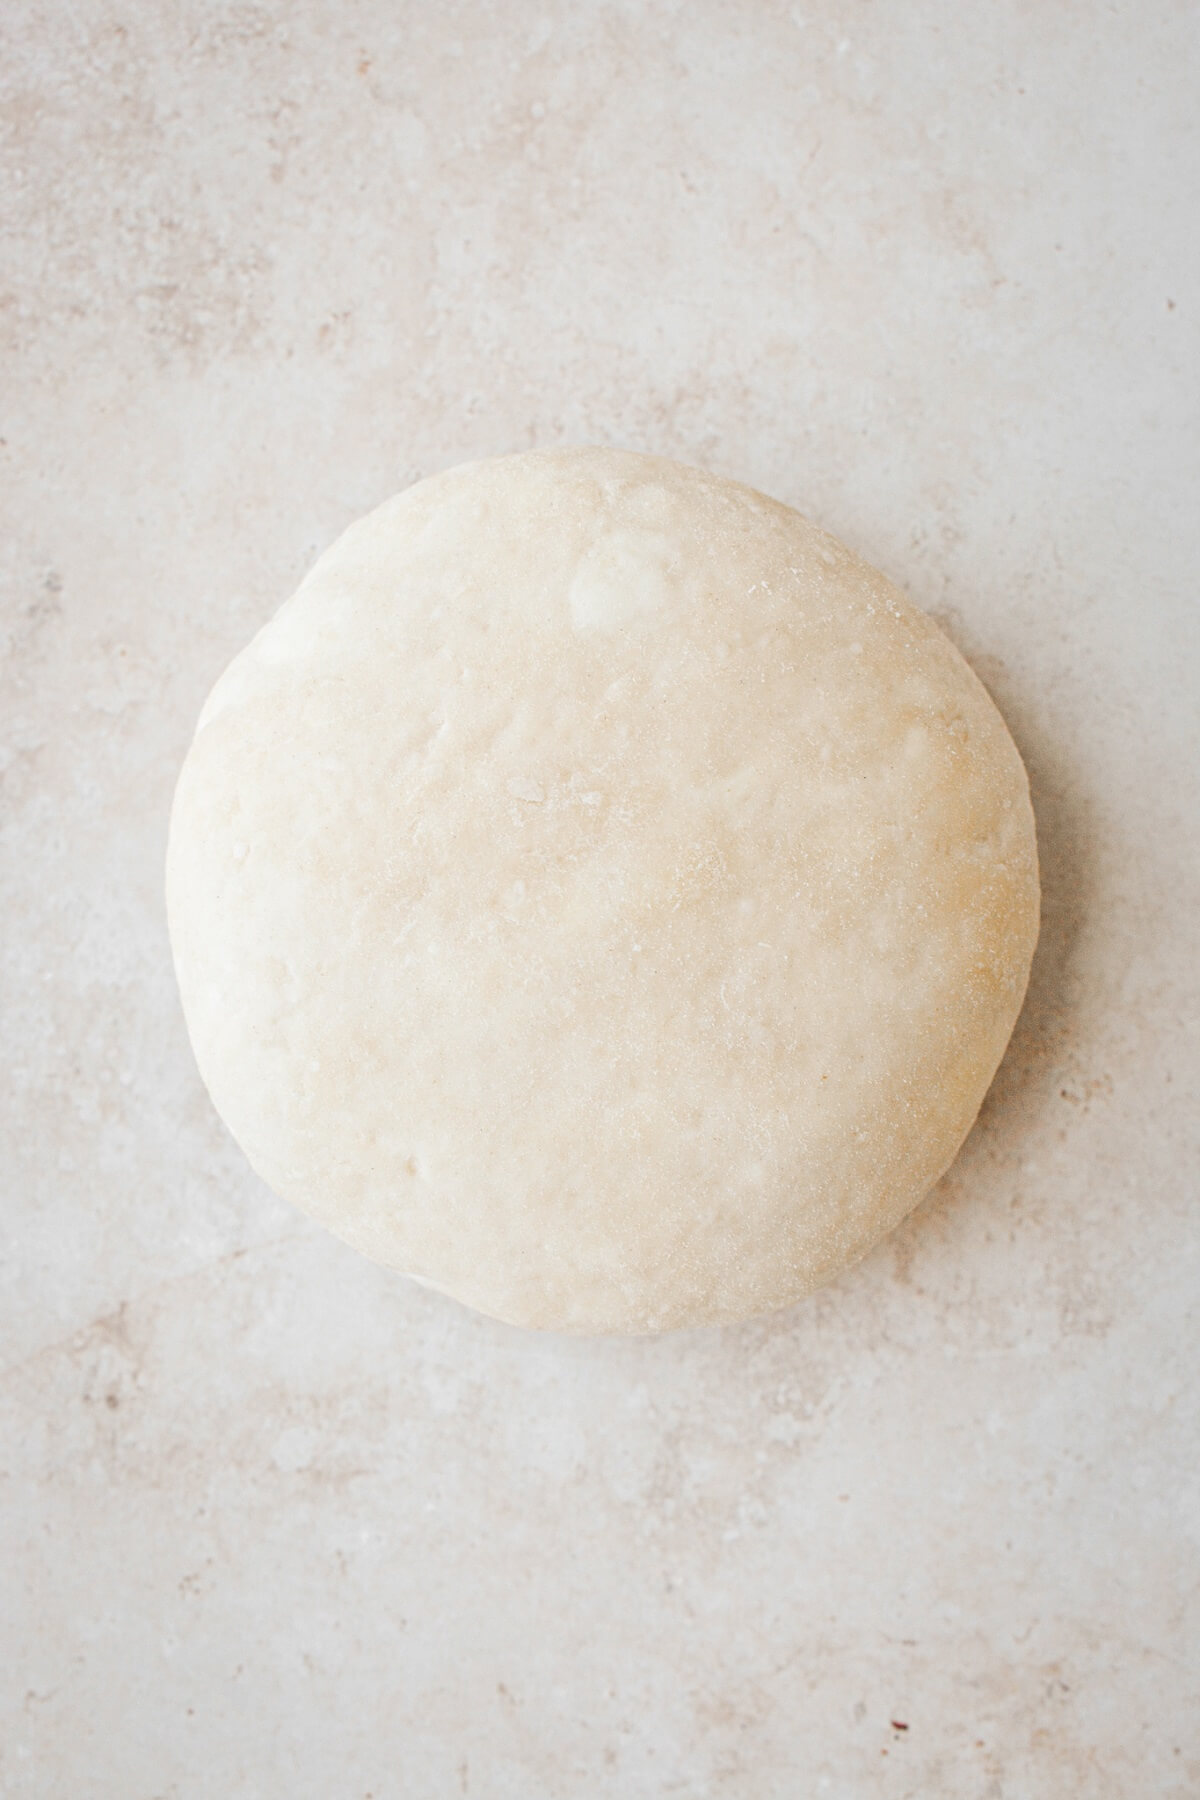 Pie dough for an apple galette.